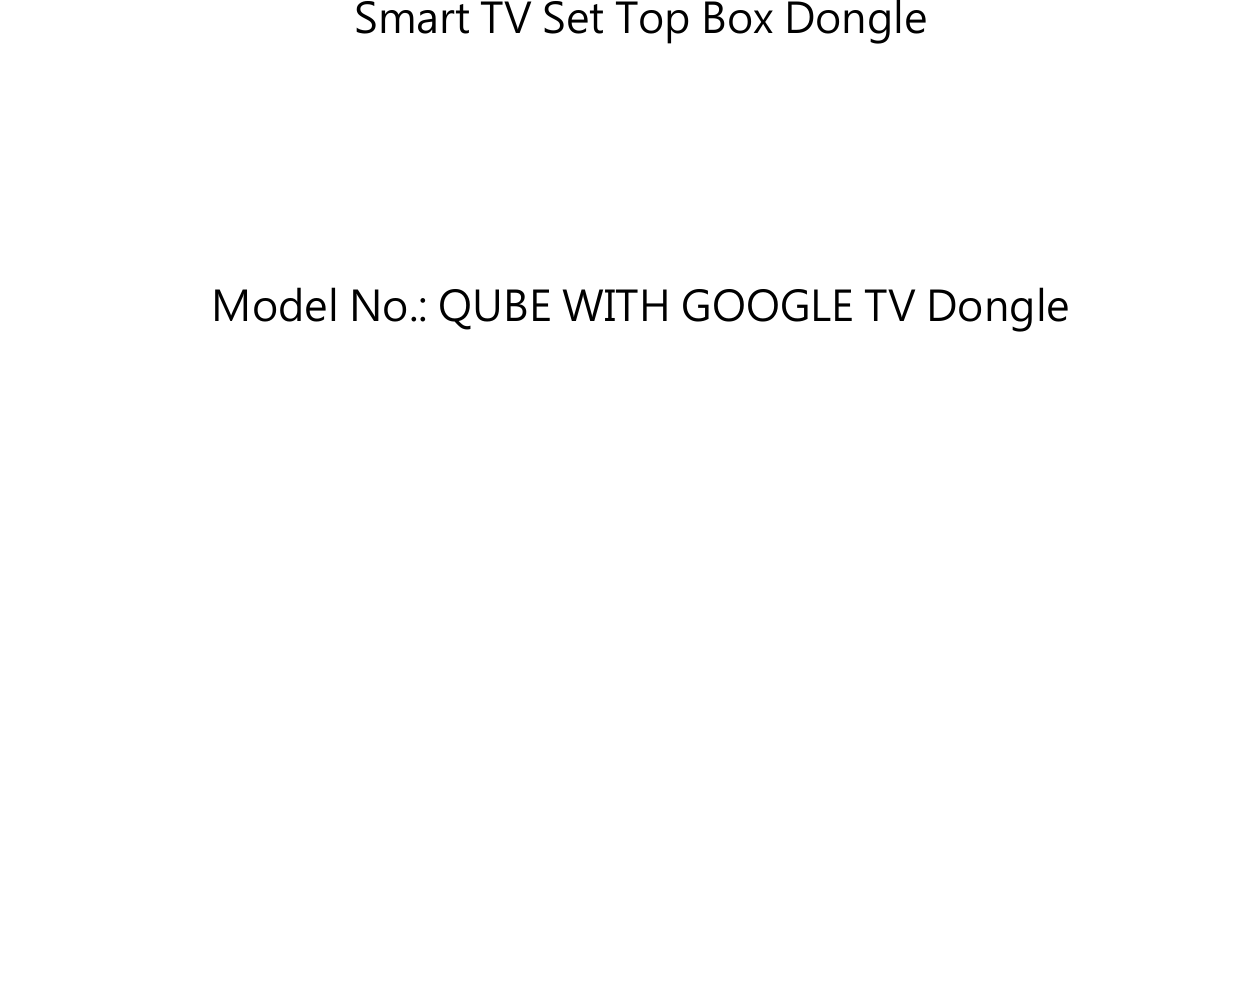        Smart TV Set Top Box Dongle     Model No.: QUBE WITH GOOGLE TV Dongle          